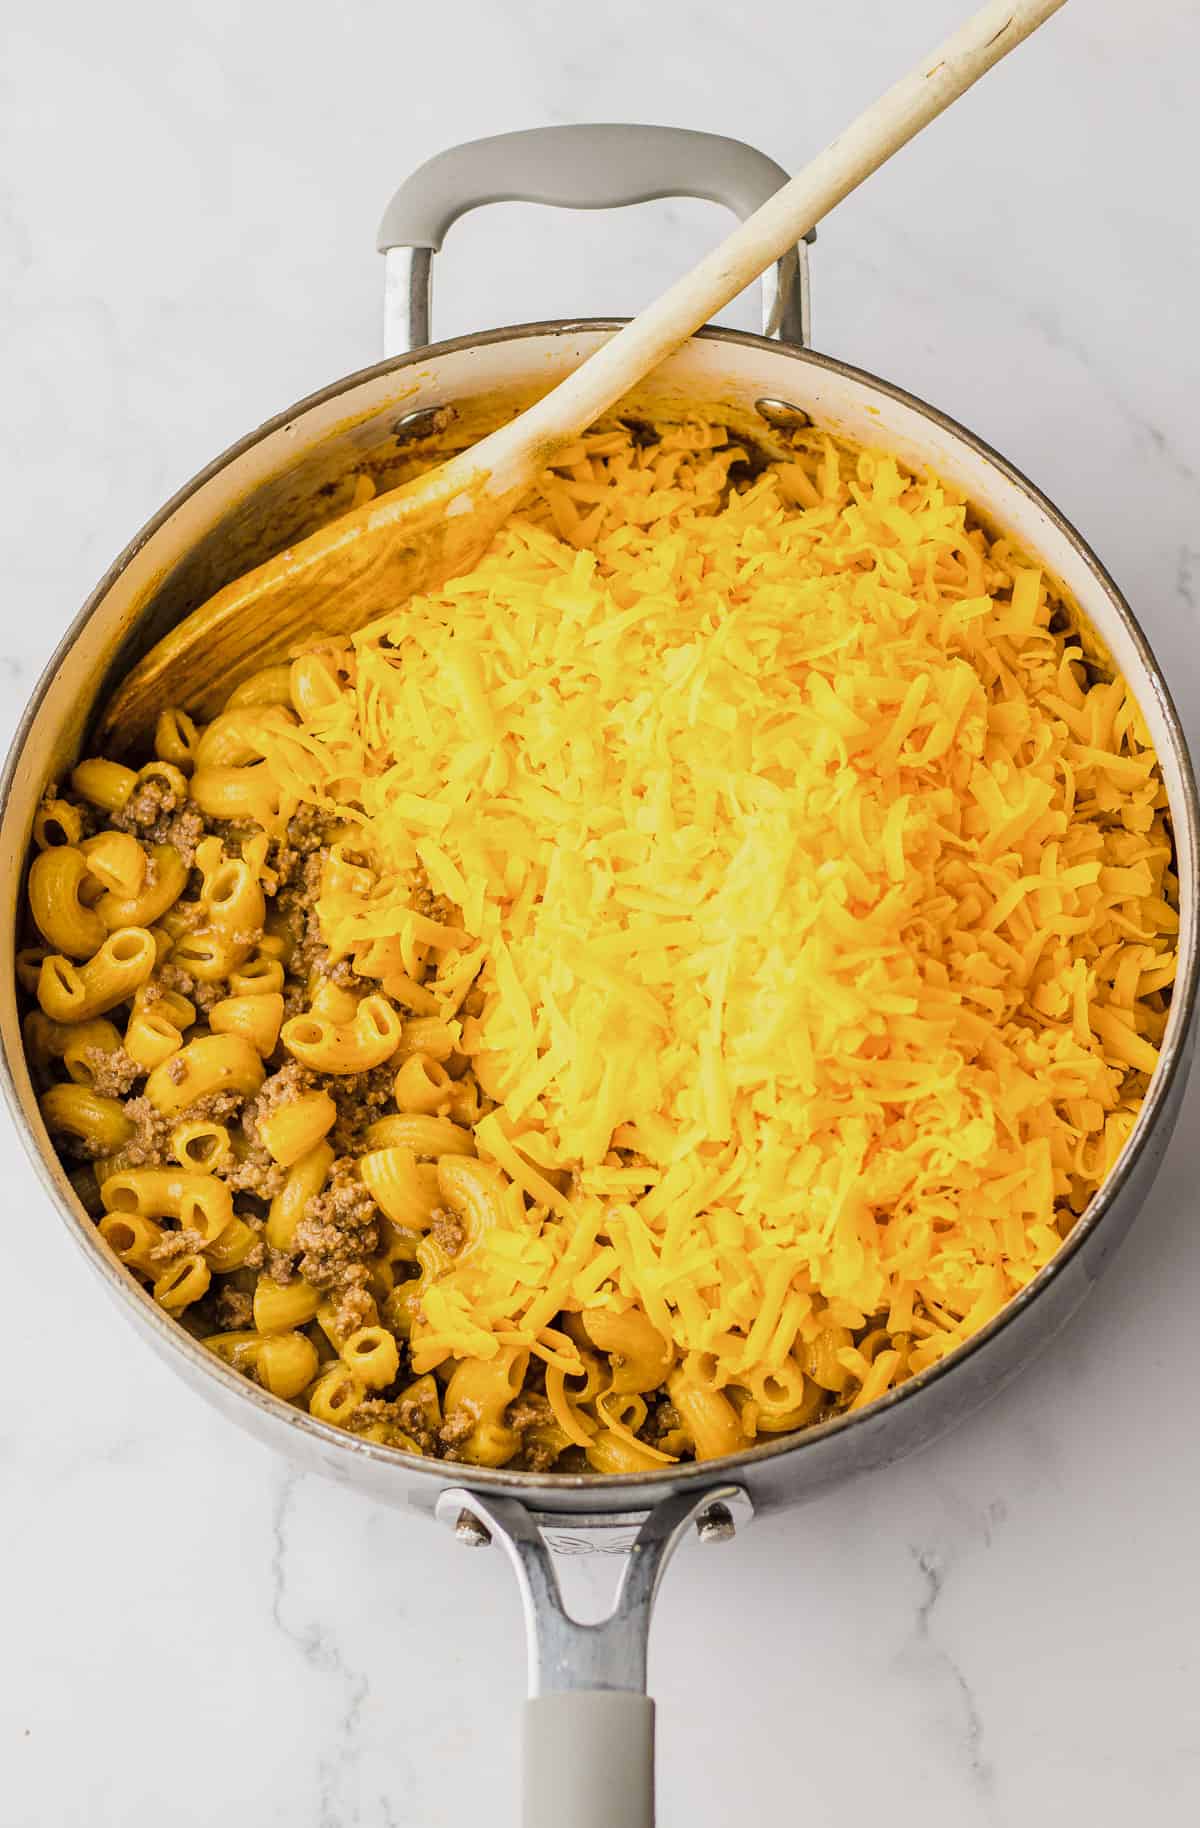 Stir in cheddar cheese when pasta is al dente.